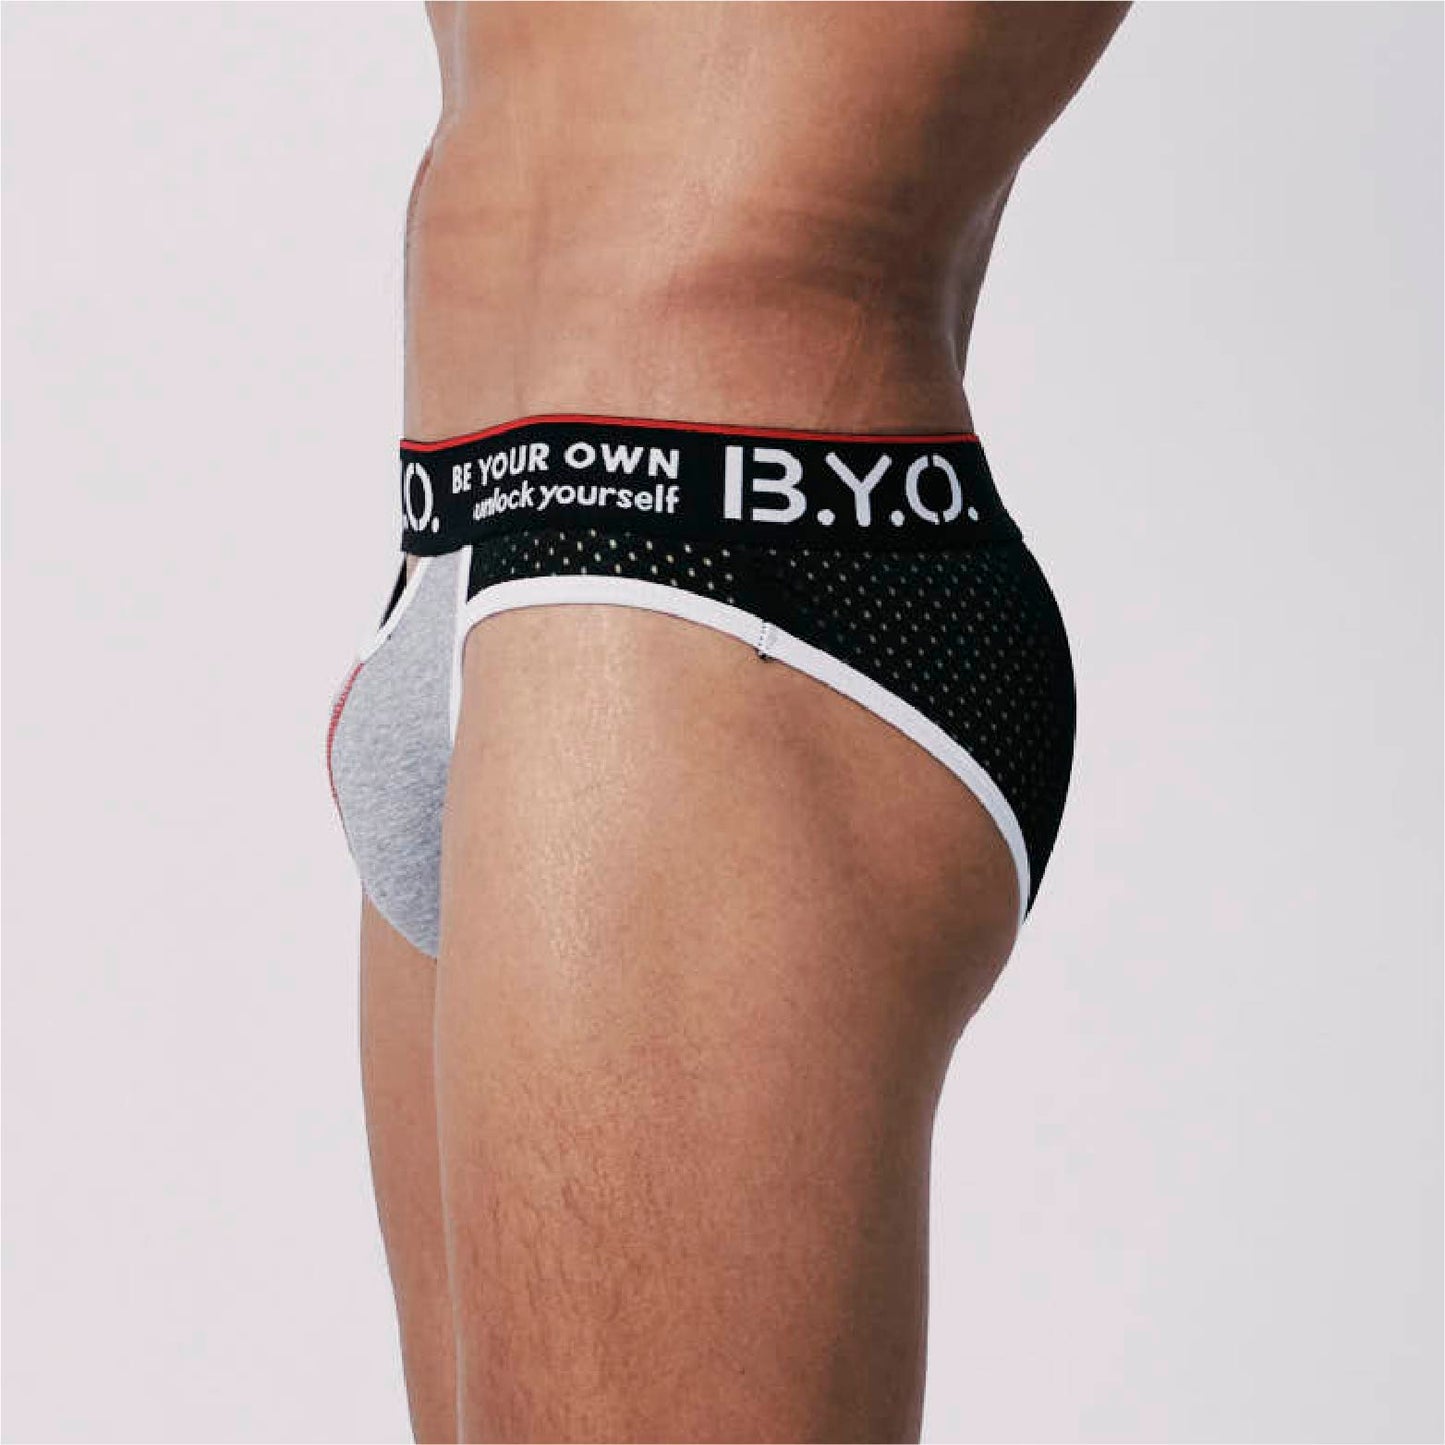 B.Y.O.BeYourOwn-Little tricks package(4入)